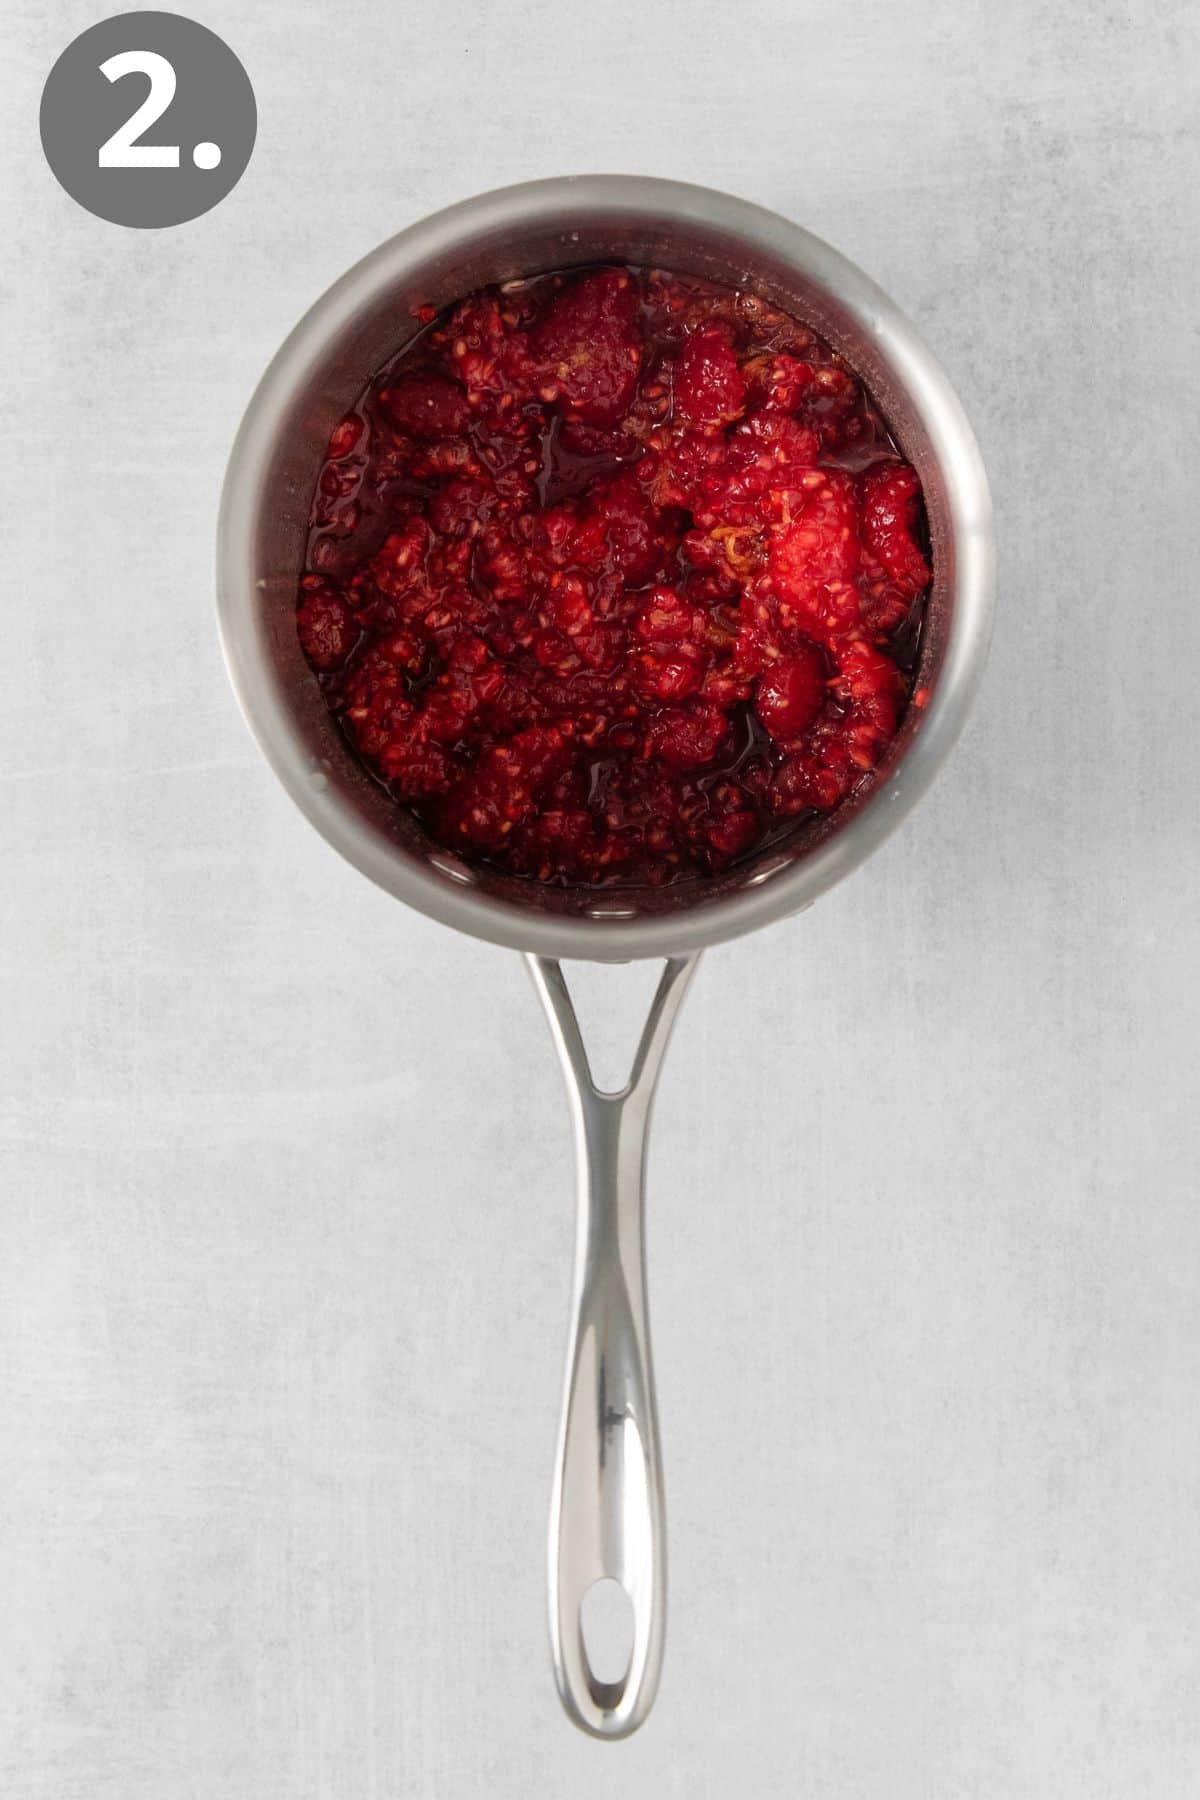 Raspberries cooking in a sauce pan